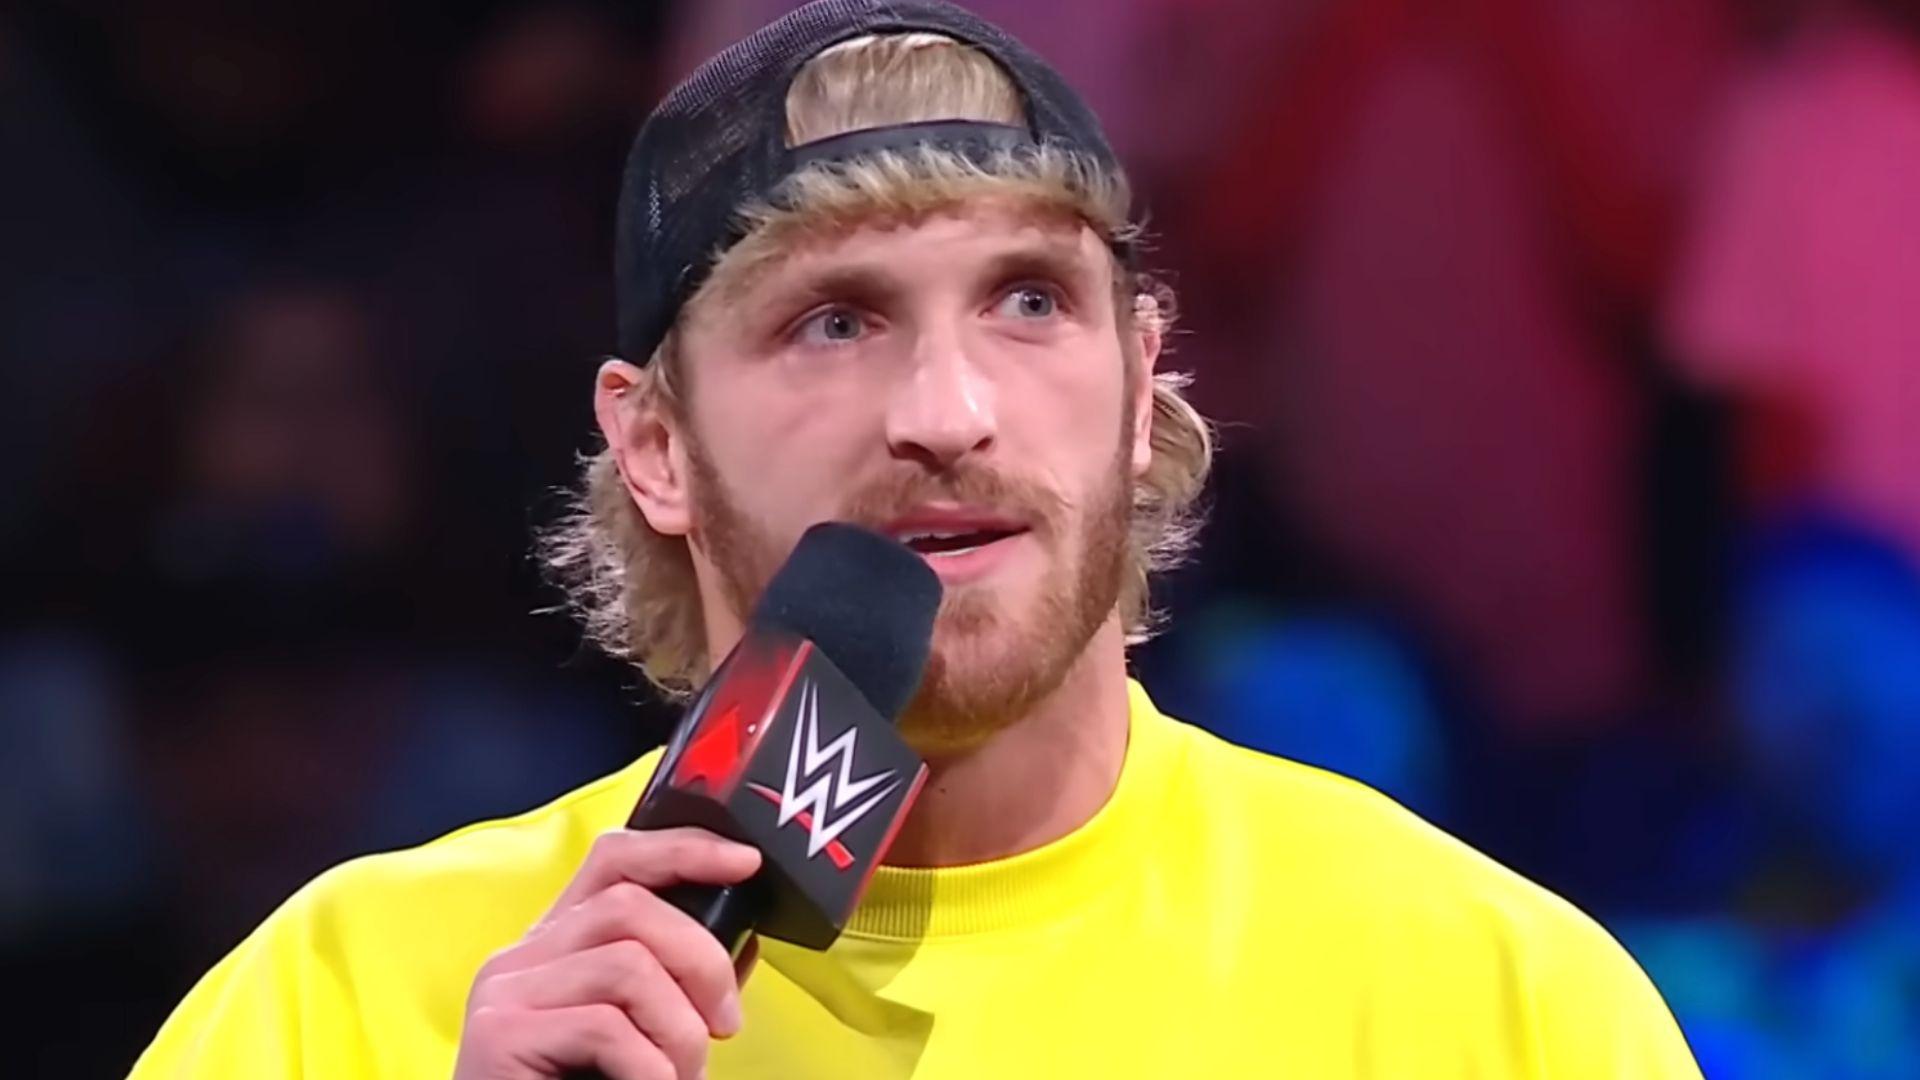 Logan paul in yellow shirt talking into WWE mic